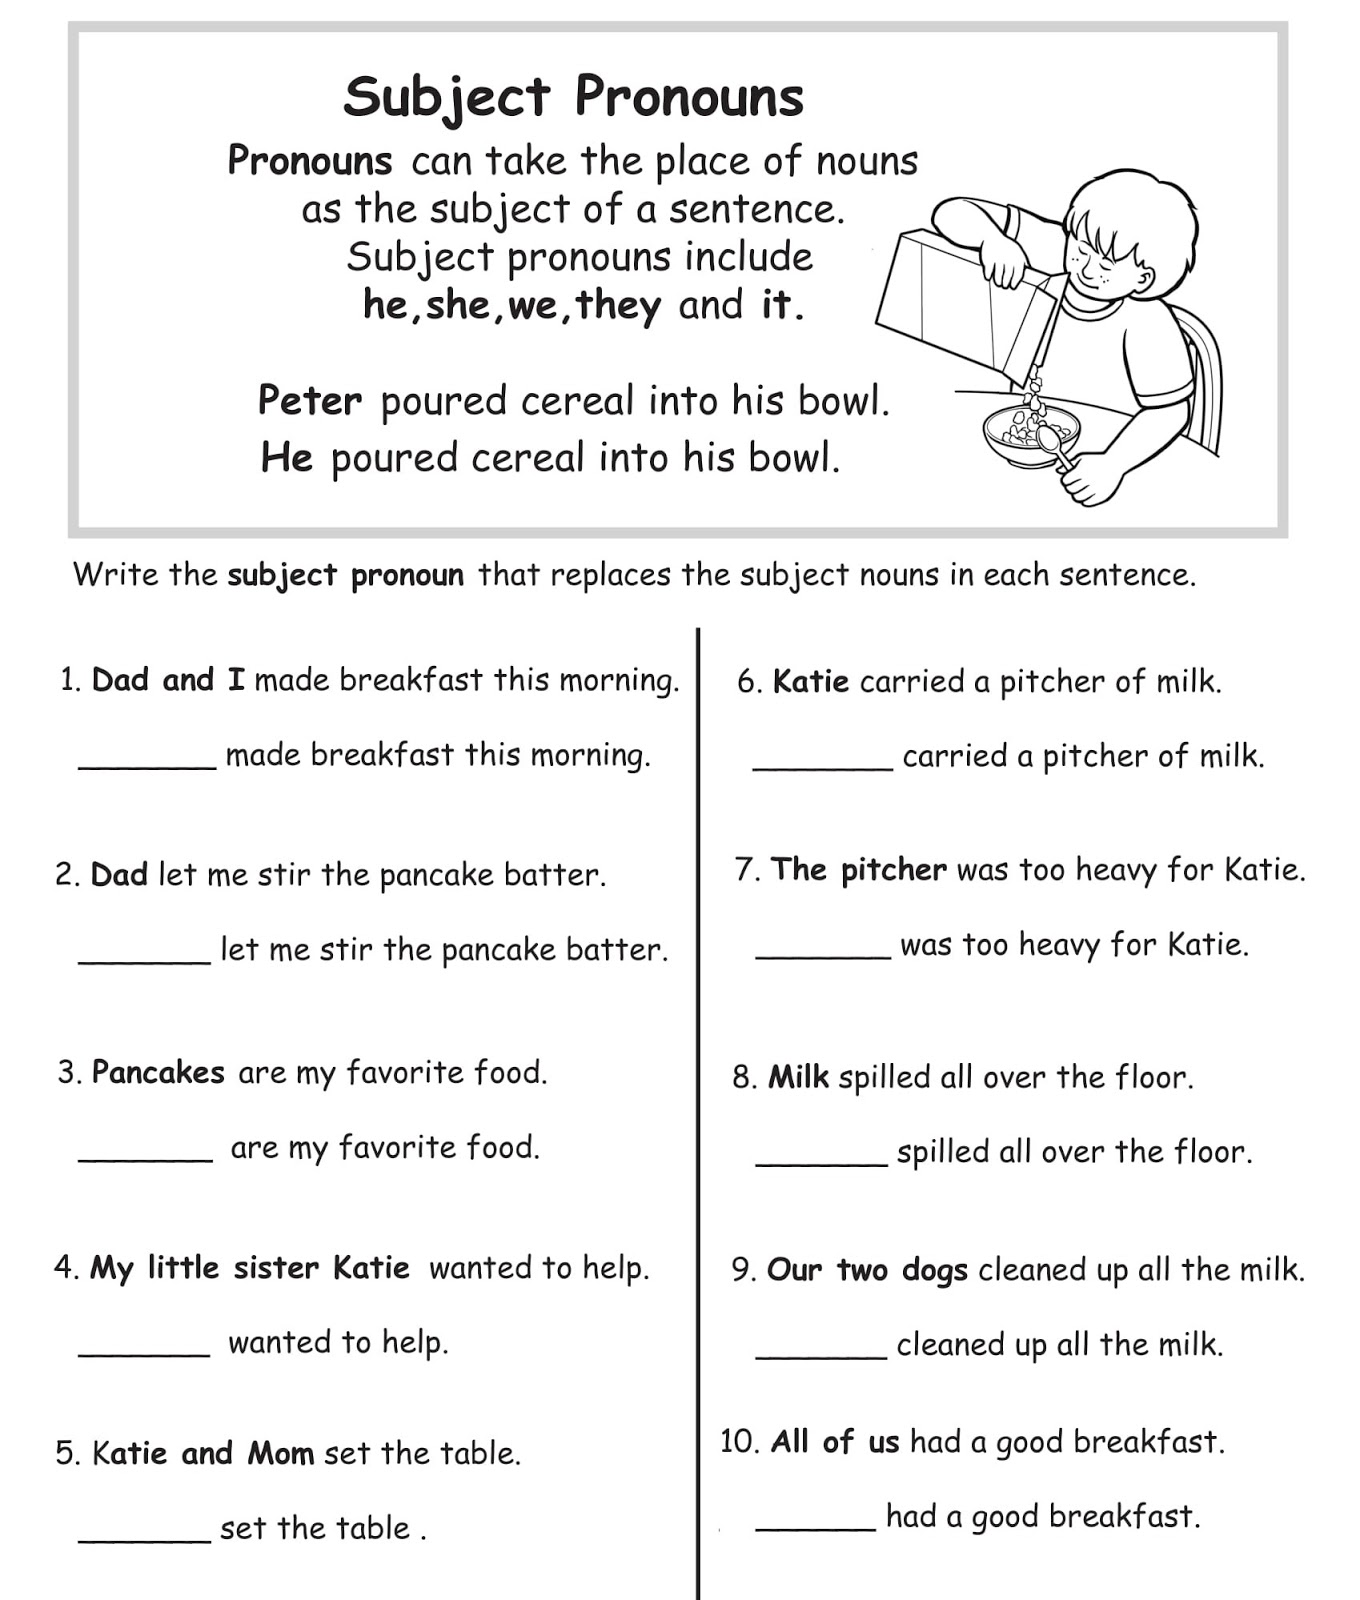 Subject Pronouns Exercises - English Grammar A To Z